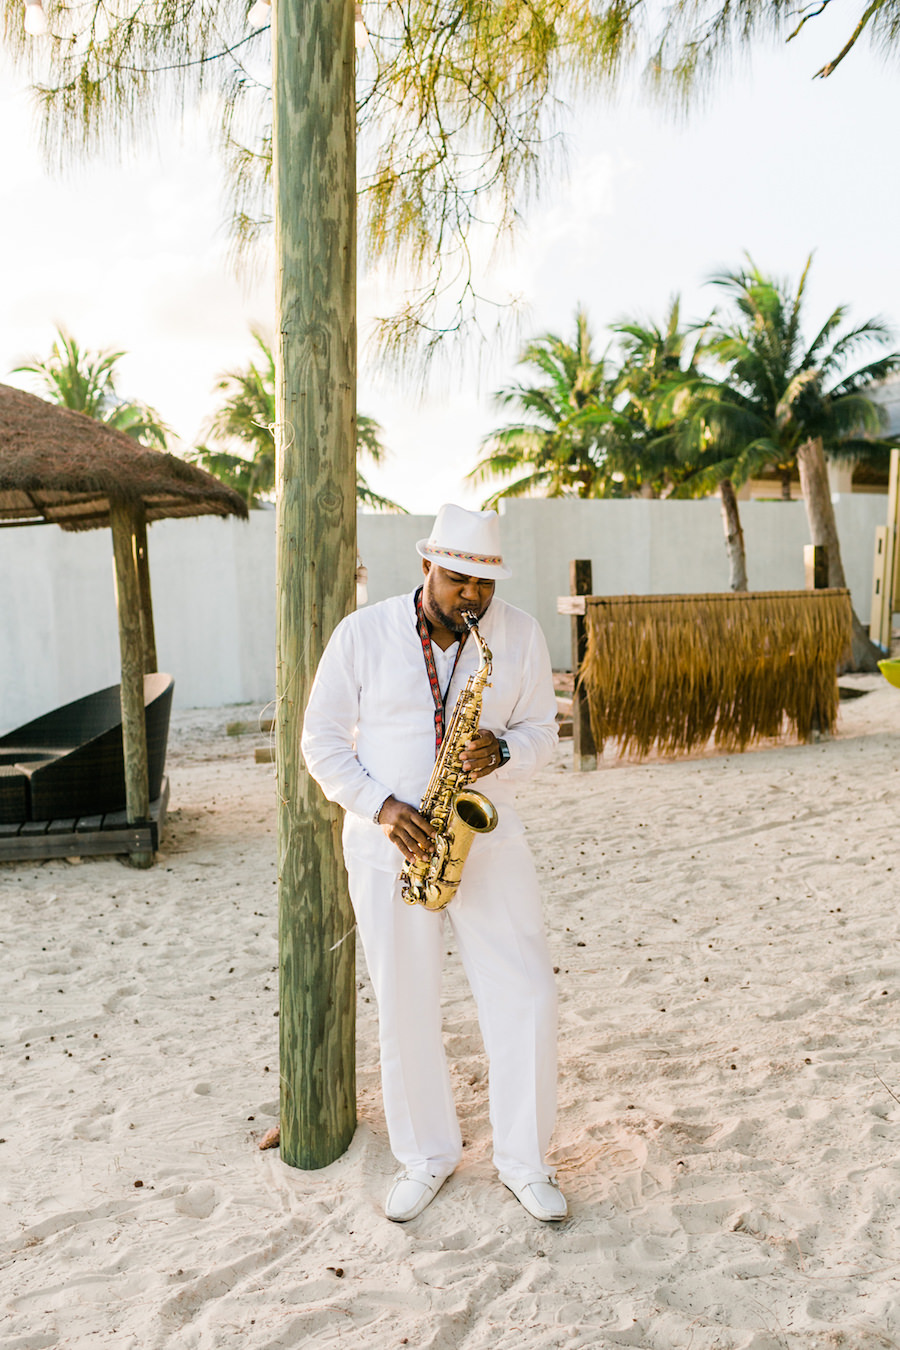 Outdoor Beach Wedding with Live Saxophone Musician Entertainment | White Wedding Inspiration | Sandals Royal Bahamian Bahamas Destination Honeymoon and Wedding | Wedding Photographer AlexisJuneWeddings